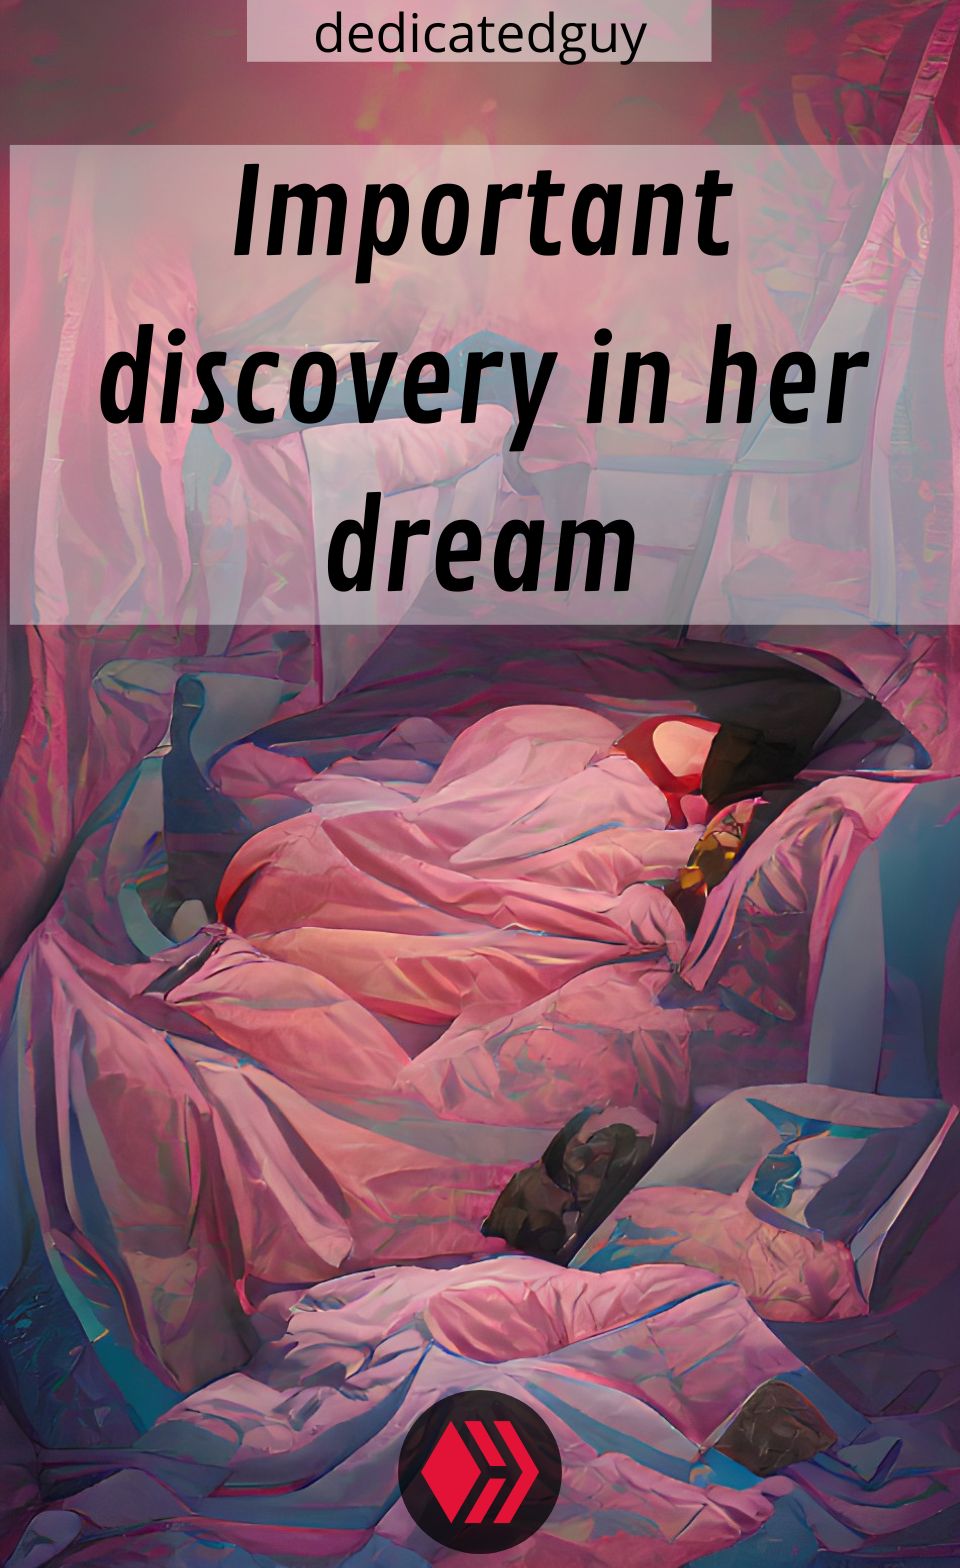 hive dedicatedguy story fiction historia ficcion art arte Important discovery in her dream.jpg